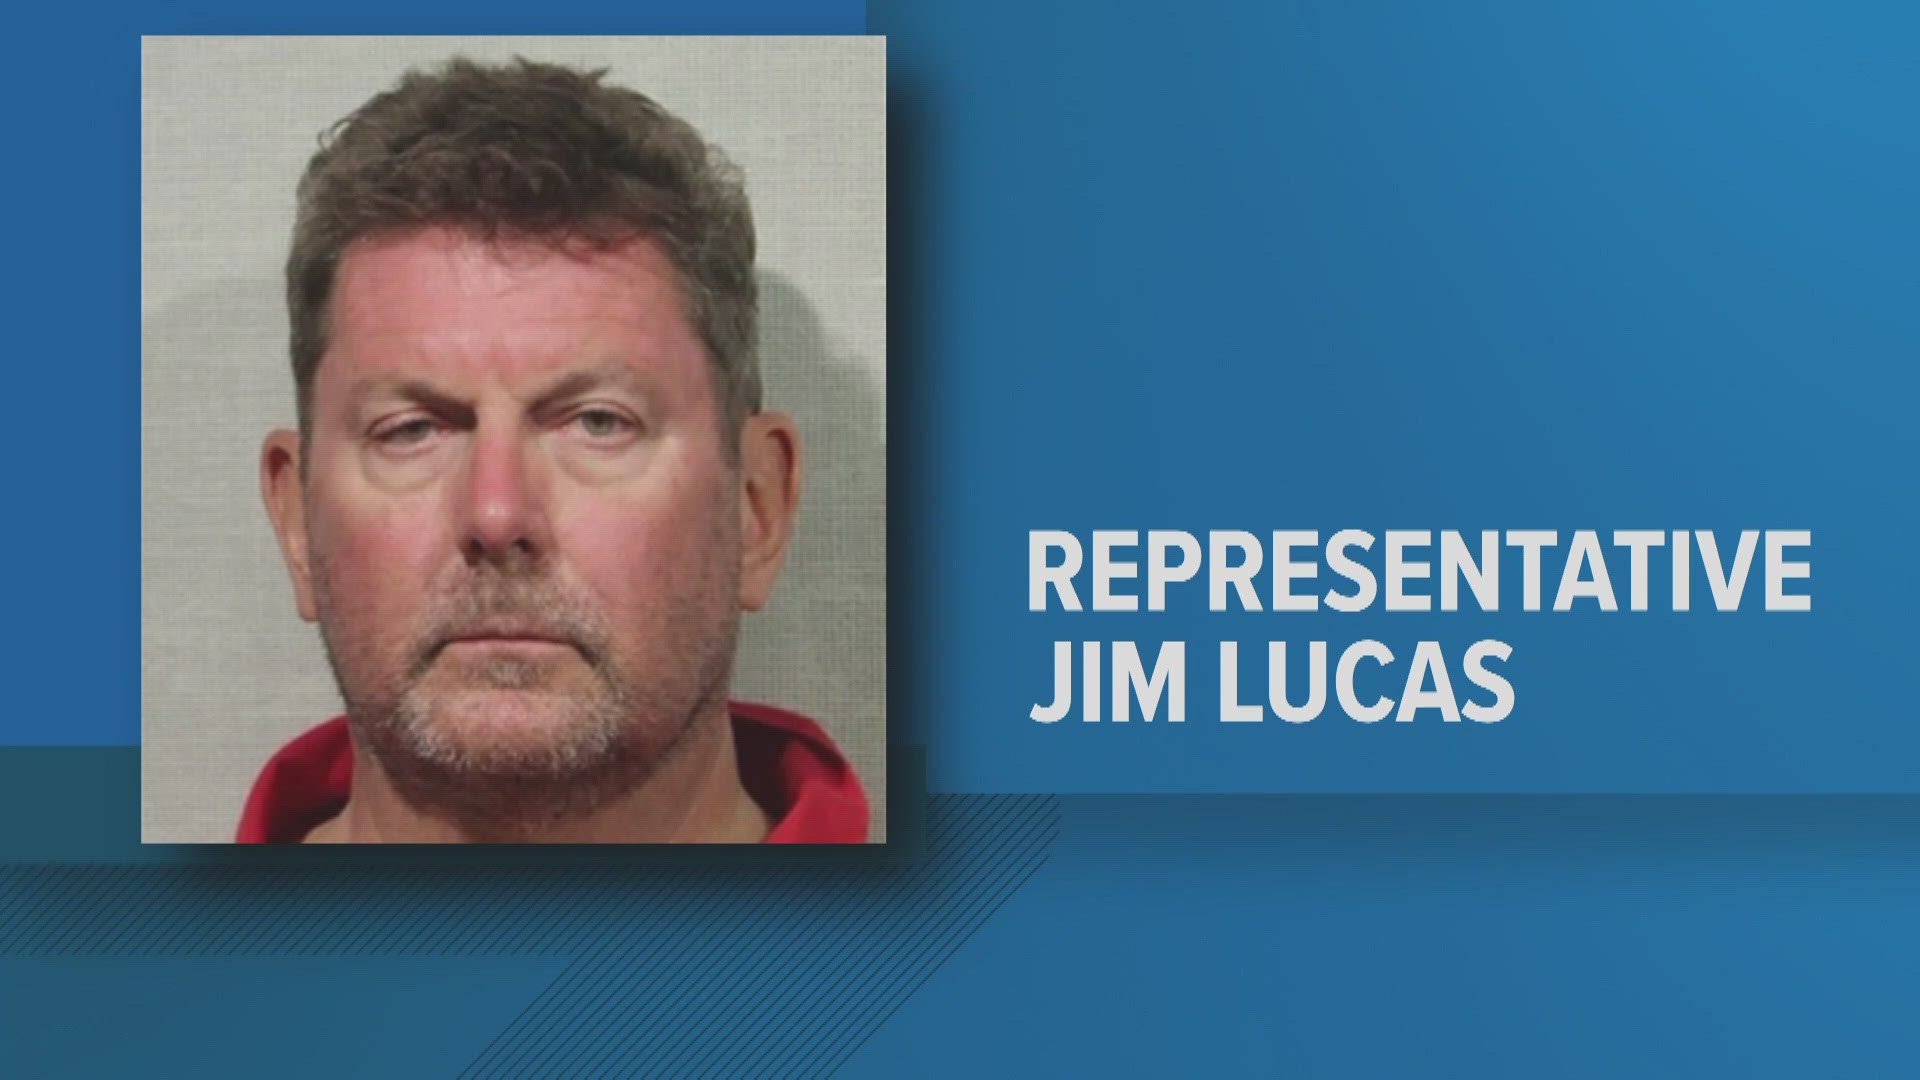 Police took Rep. Jim Lucas into custody around midnight last Wednesday, accused of driving under the influence.